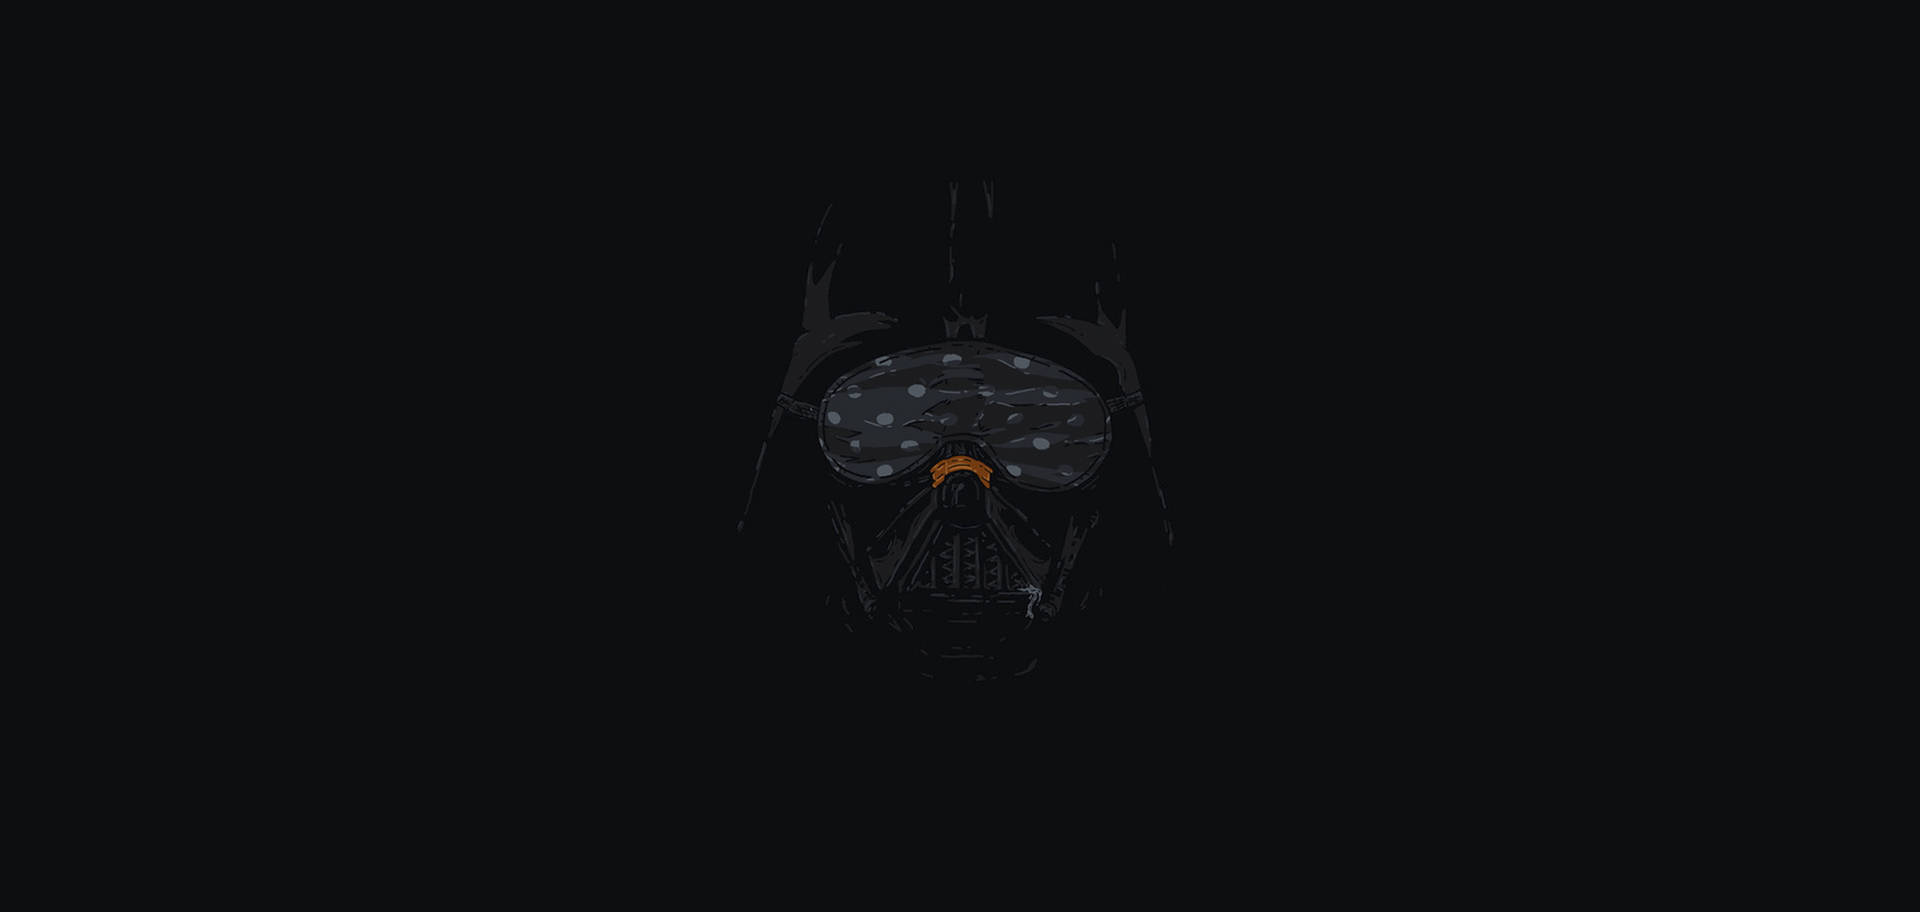 Darth Vader 4k Sleep Mask Background